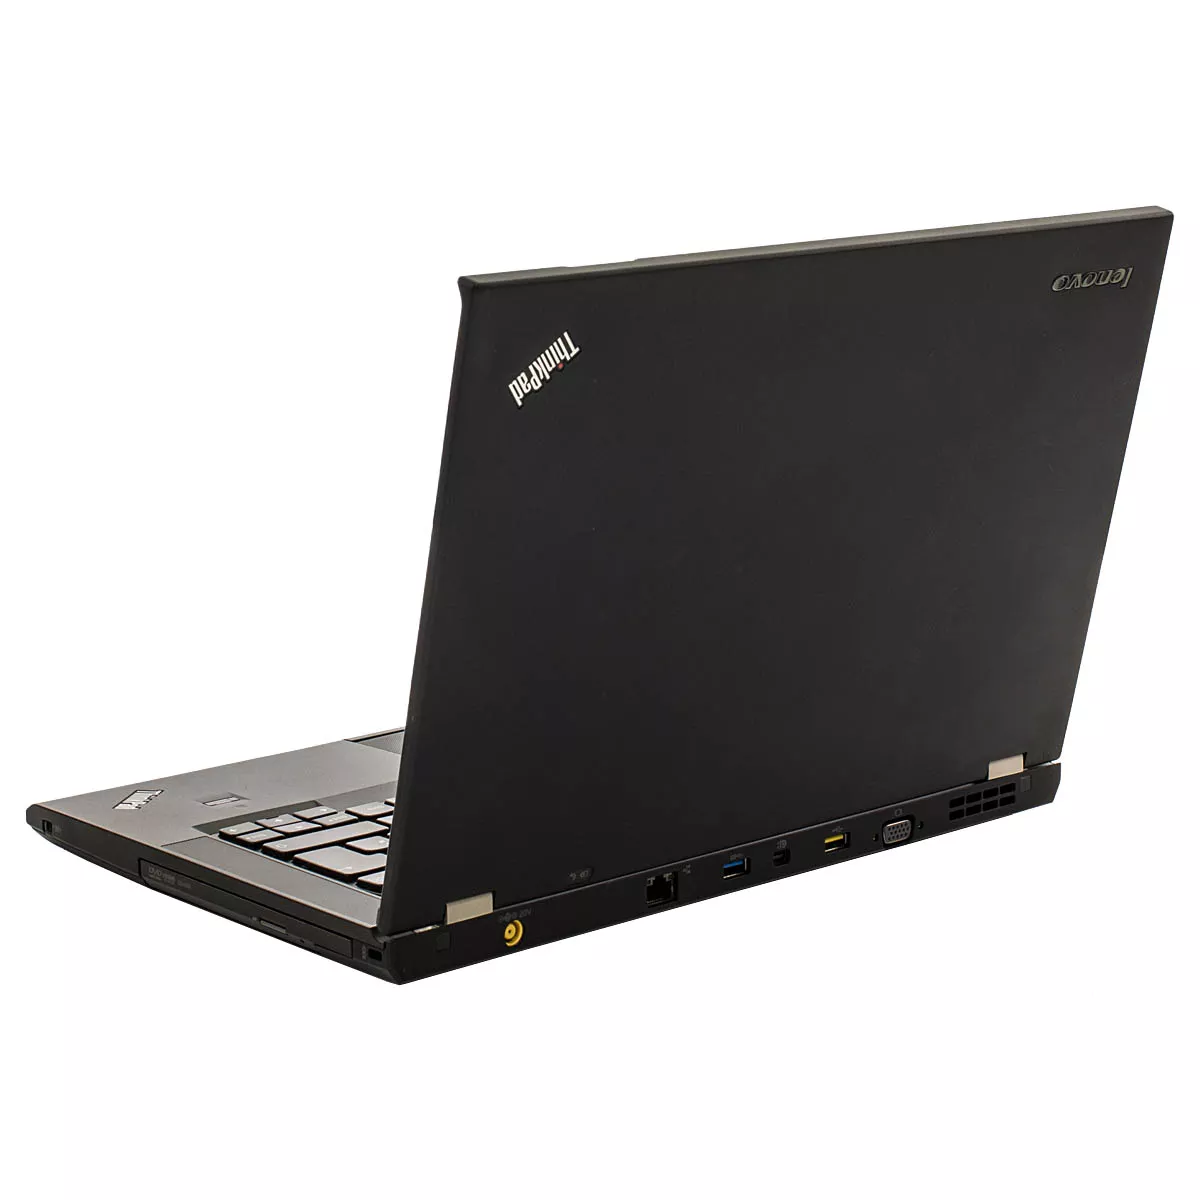 Lenovo ThinkPad T430s Core i5 3320M 2,6 GHz Webcam